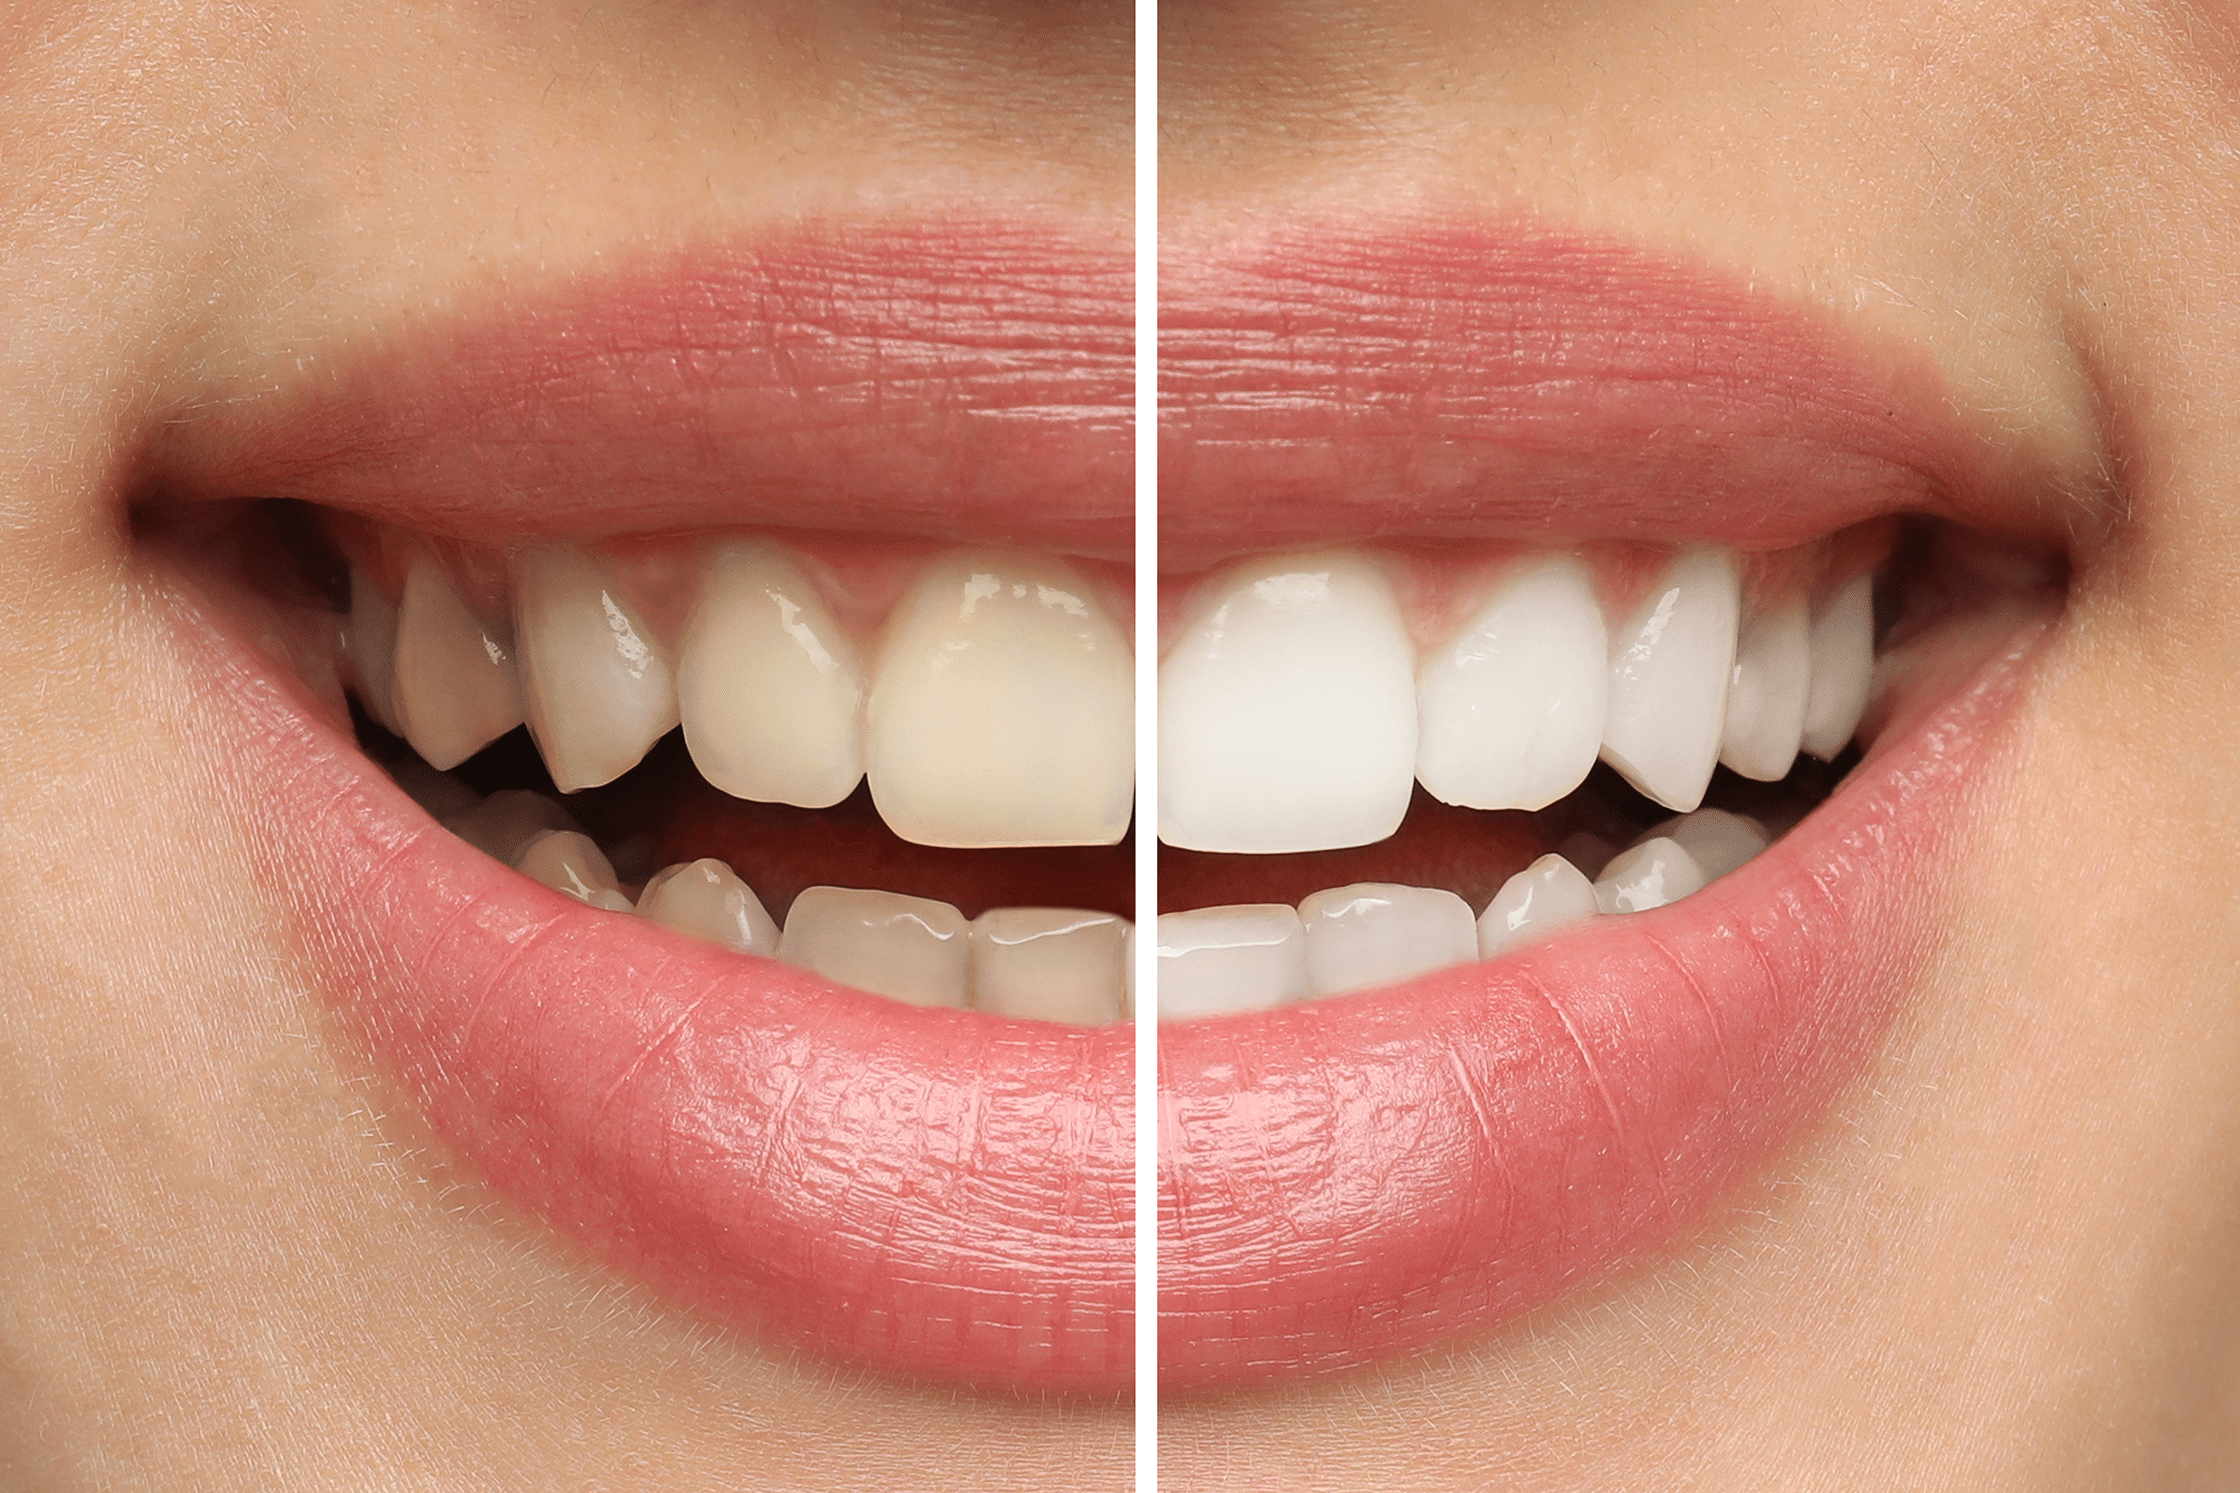 Results of Teeth whitening Treatment in Ridgeland MS